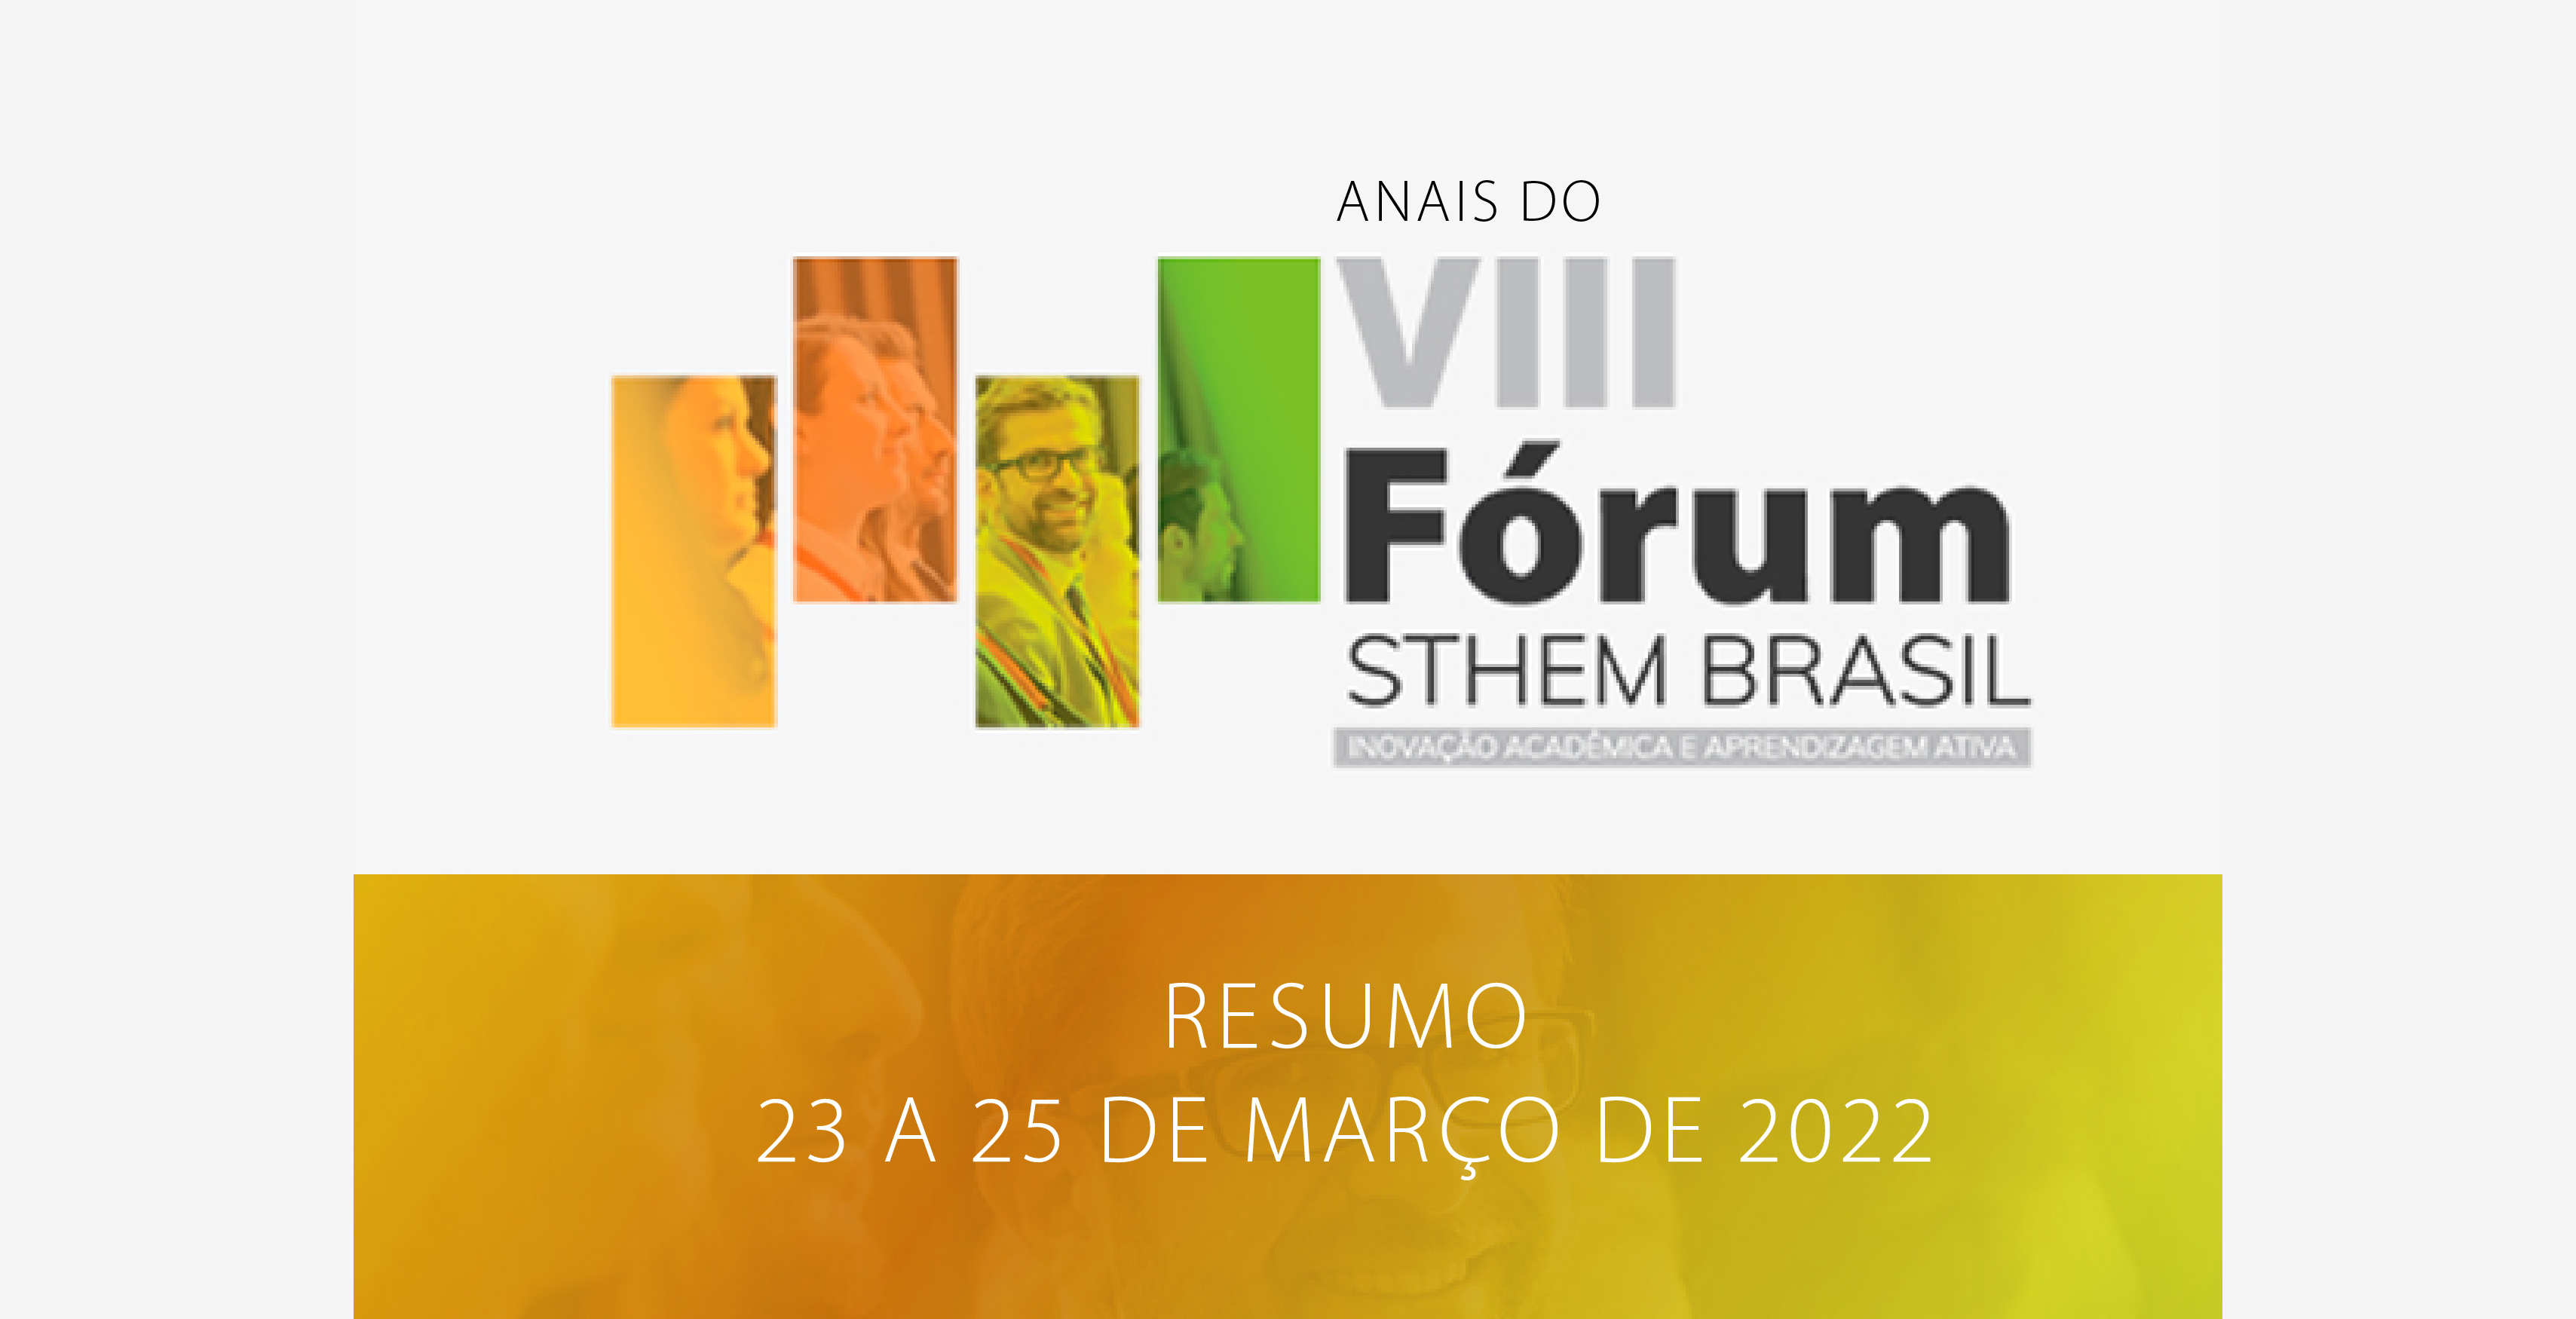 capa--site--vii--sthem brasil--2022-01